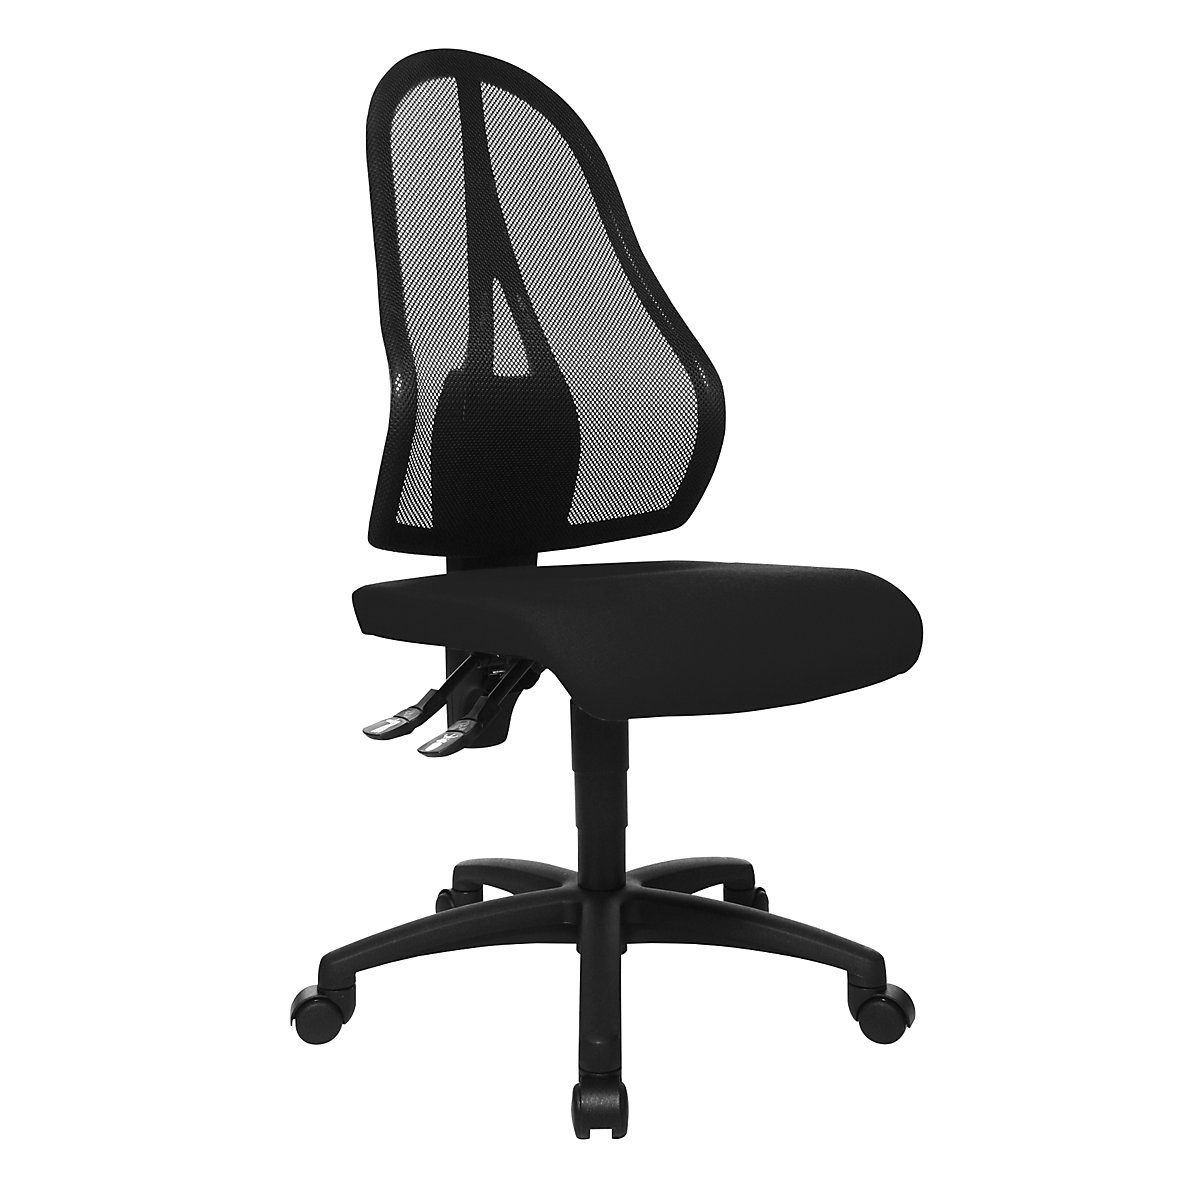 OPEN POINT P office swivel chair - Topstar